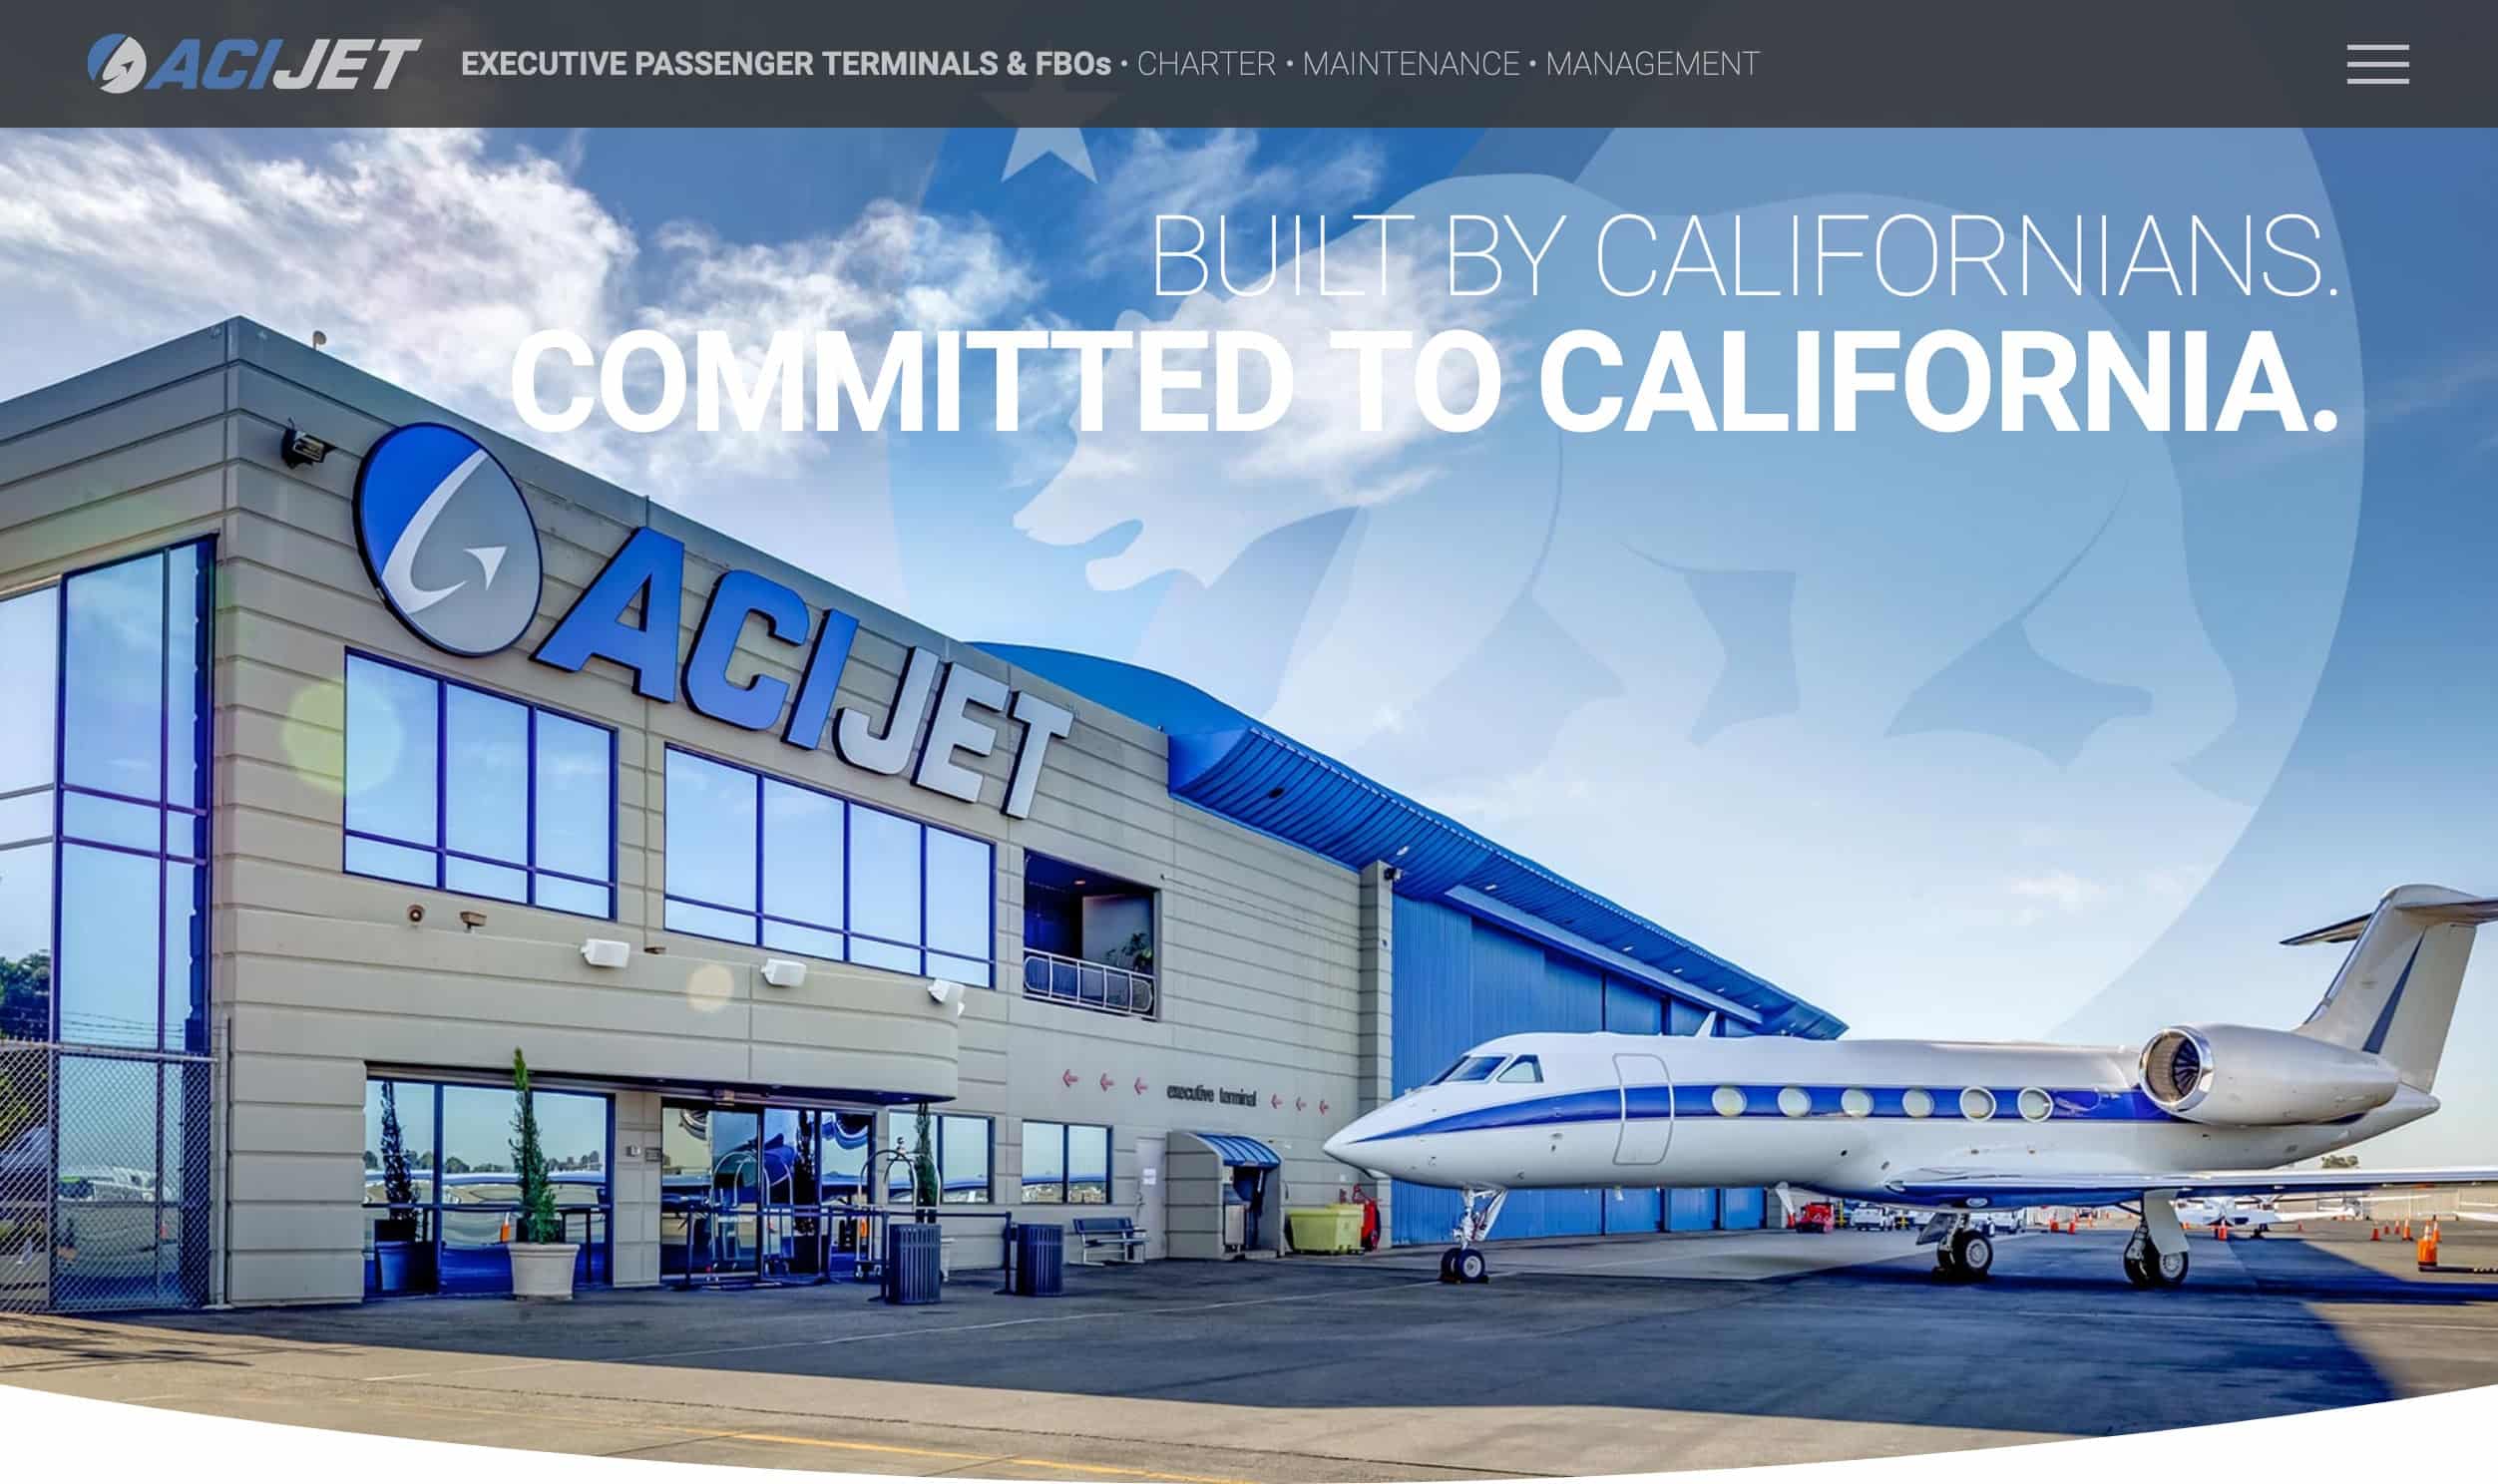 ACIJet FBO Homepage showing a plane and airport terminal